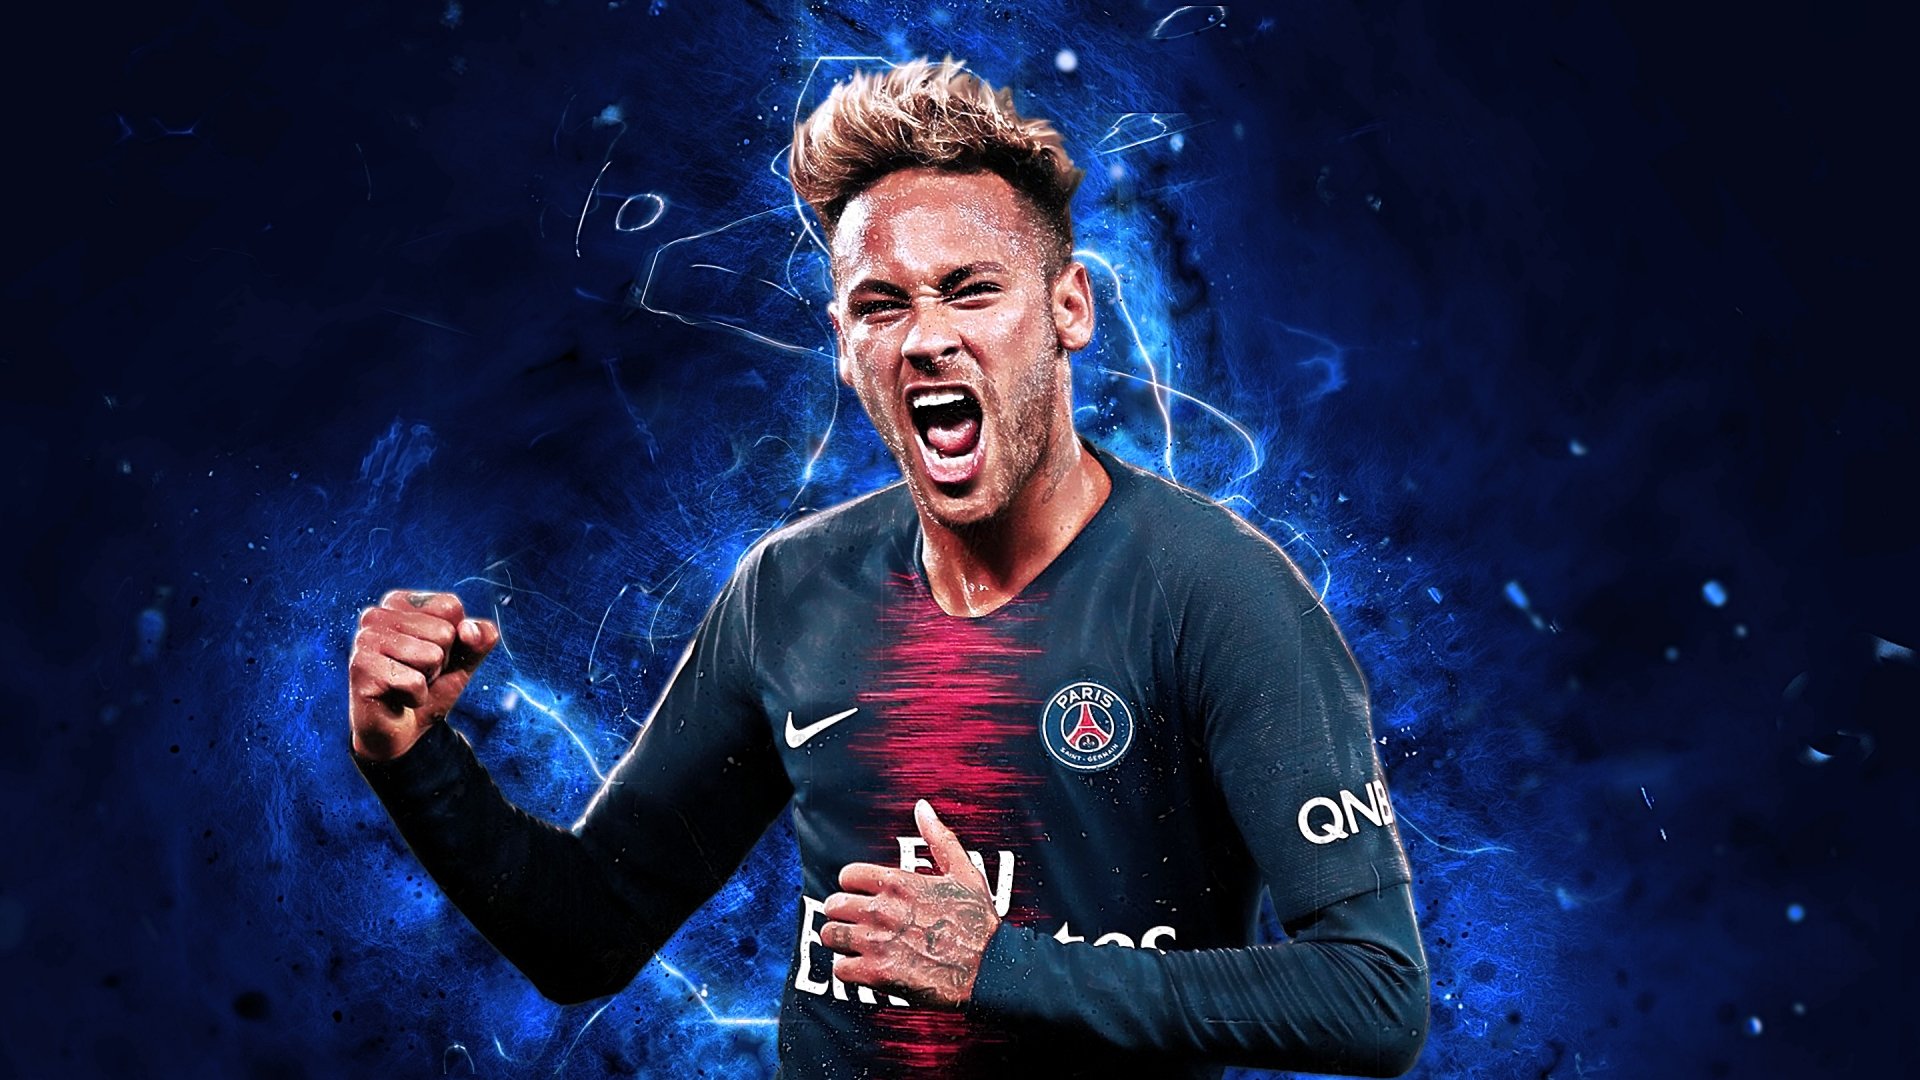 Neymar Jr Wallpaper 1080P